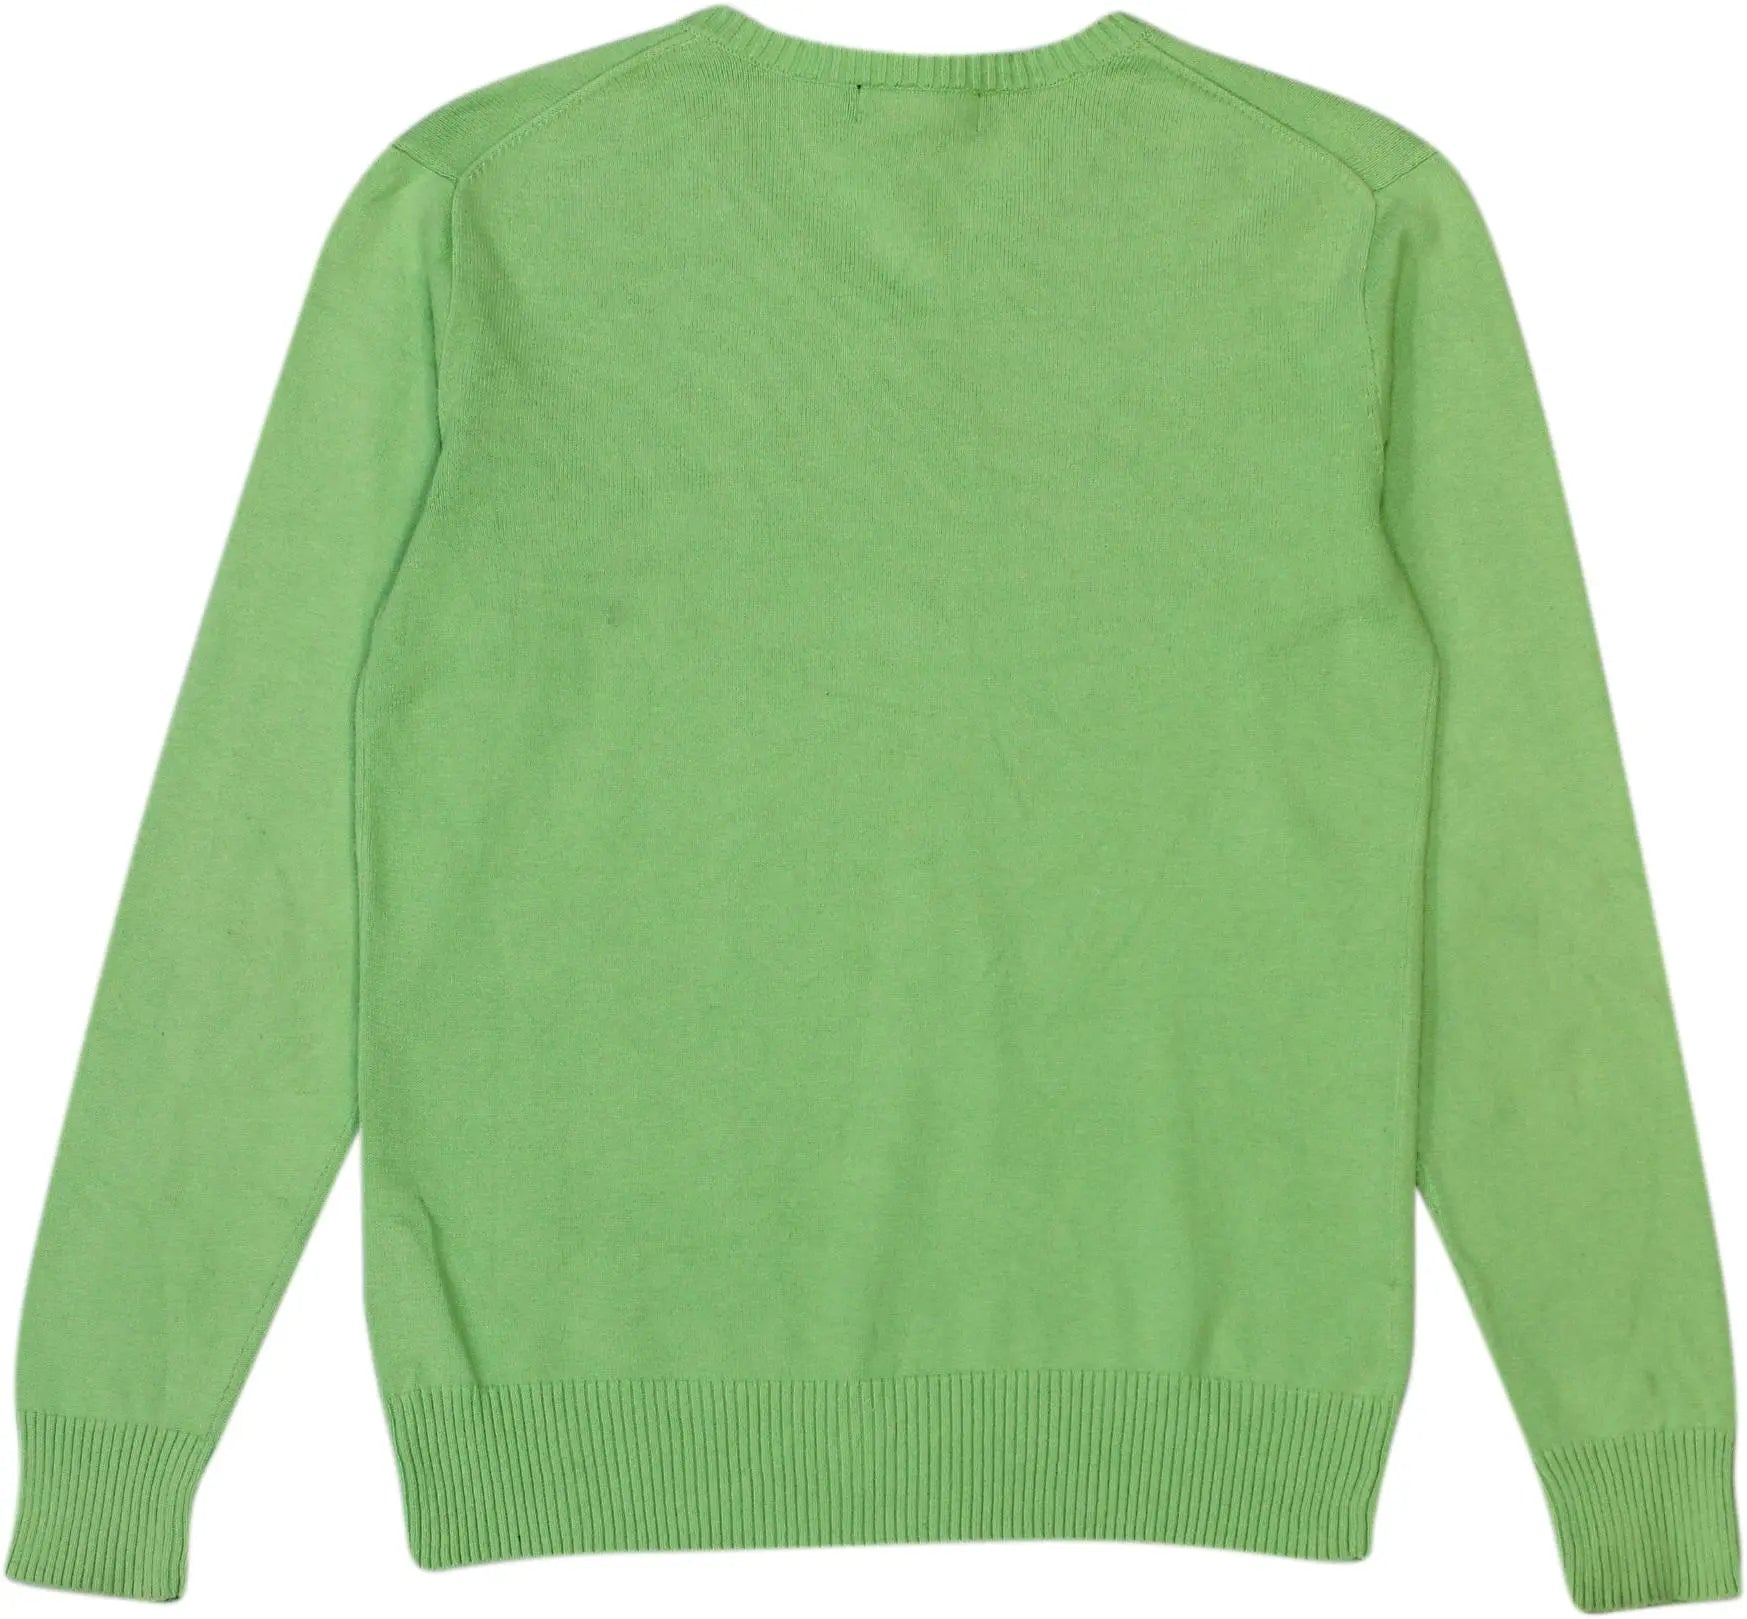 Ralph Lauren - Green V-neck Sweater by Ralph Lauren- ThriftTale.com - Vintage and second handclothing